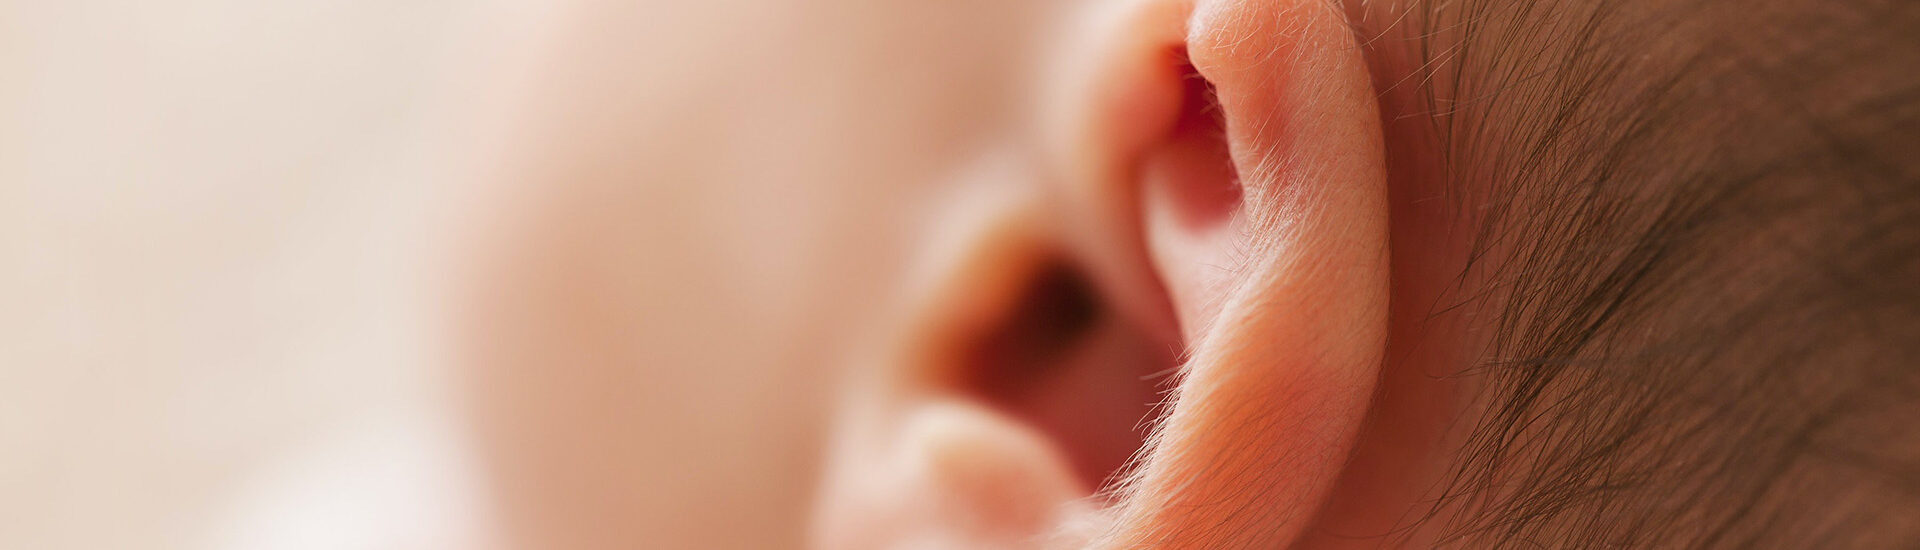 Closeup of a baby's ear